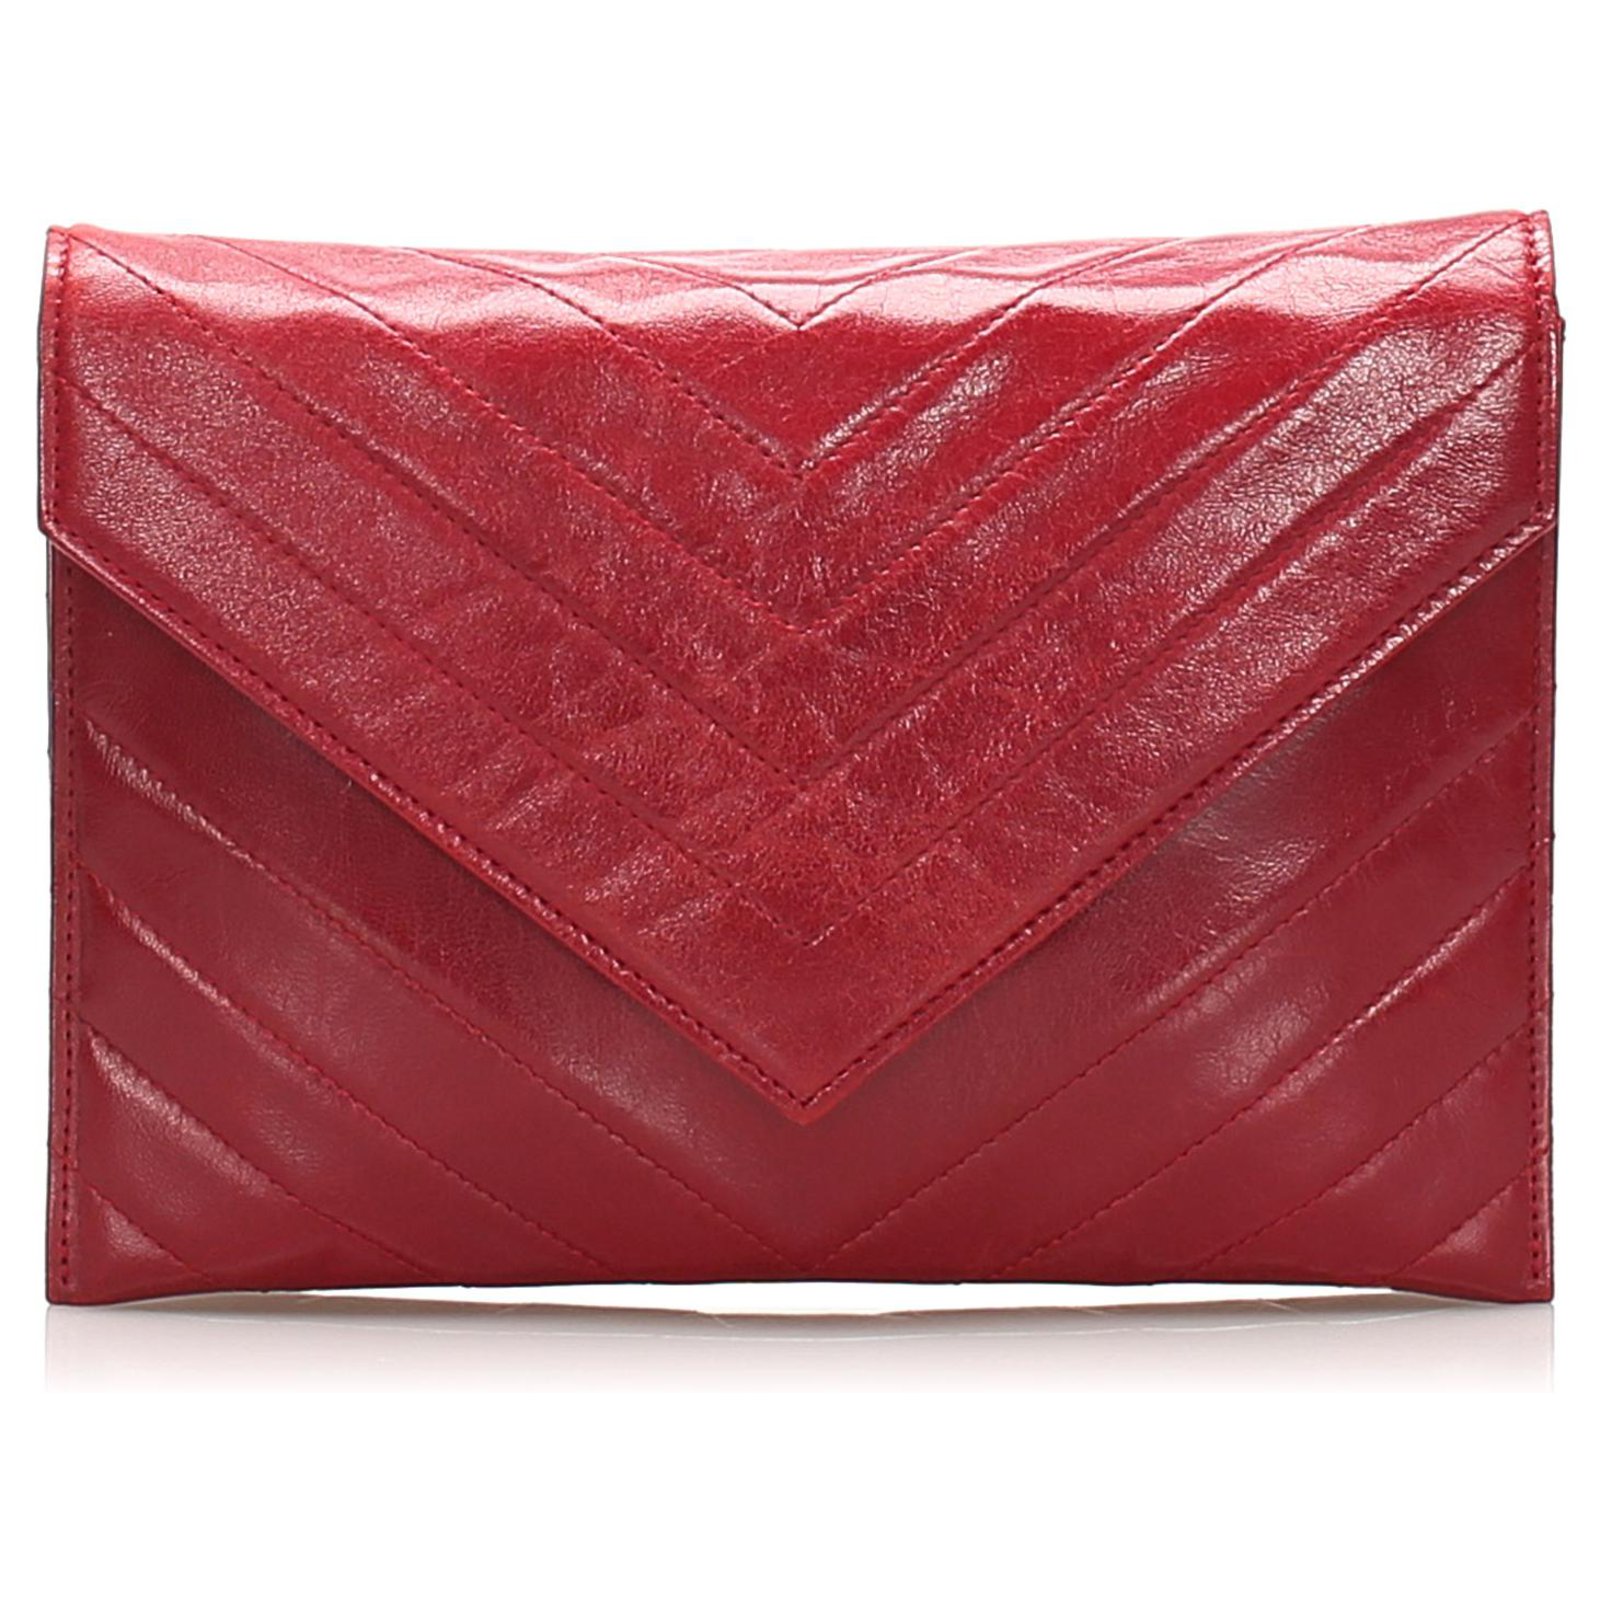 Saint Laurent Ysl Flap Quilted Leather Clutch Bag